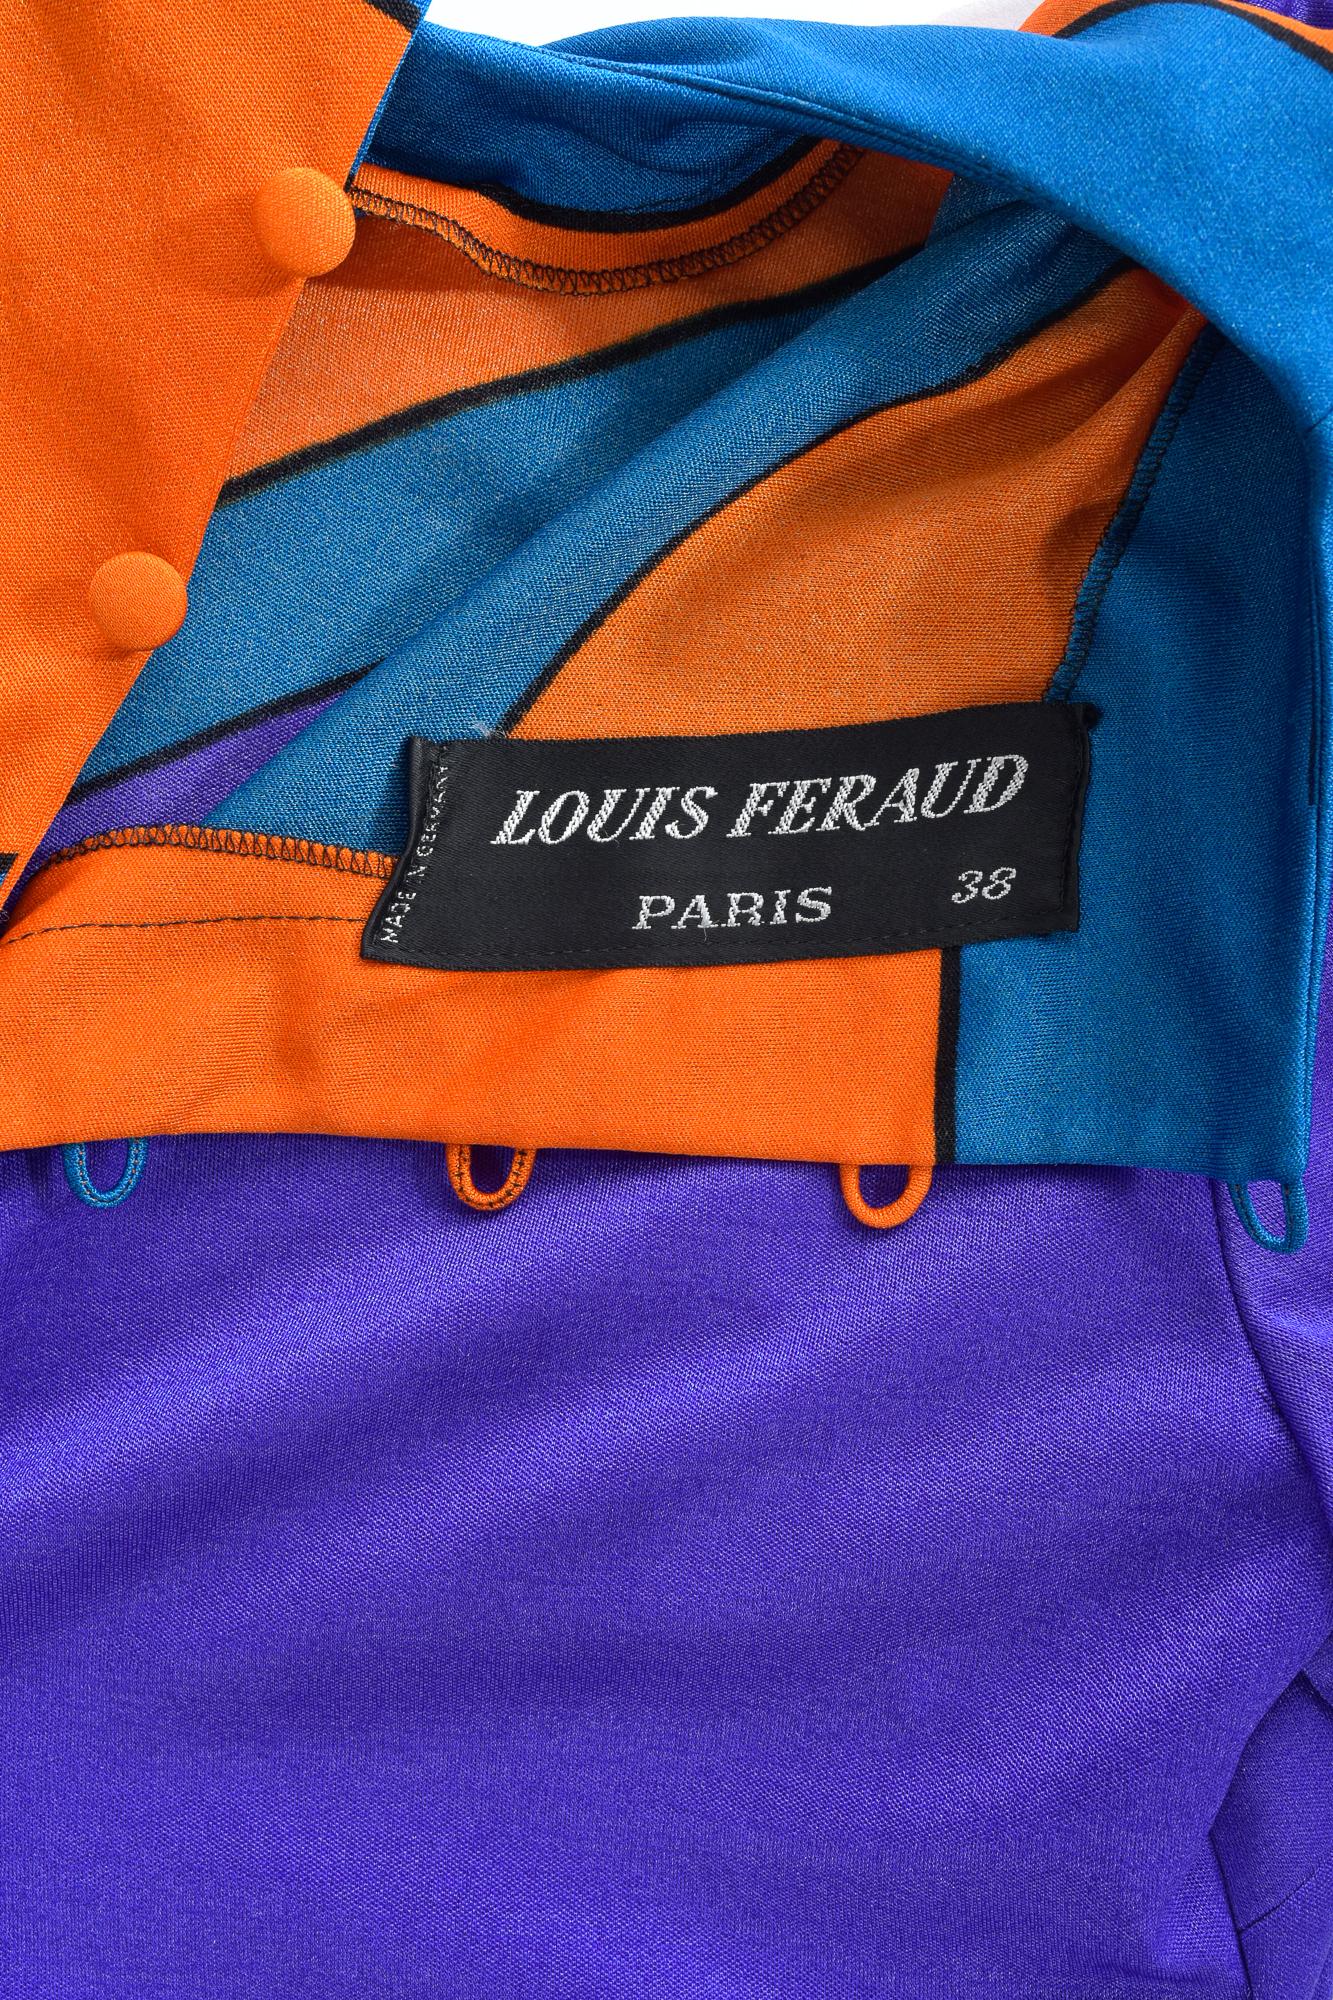 Purple Pop Art printed jersey dress by Louis Féraud Circa 1972